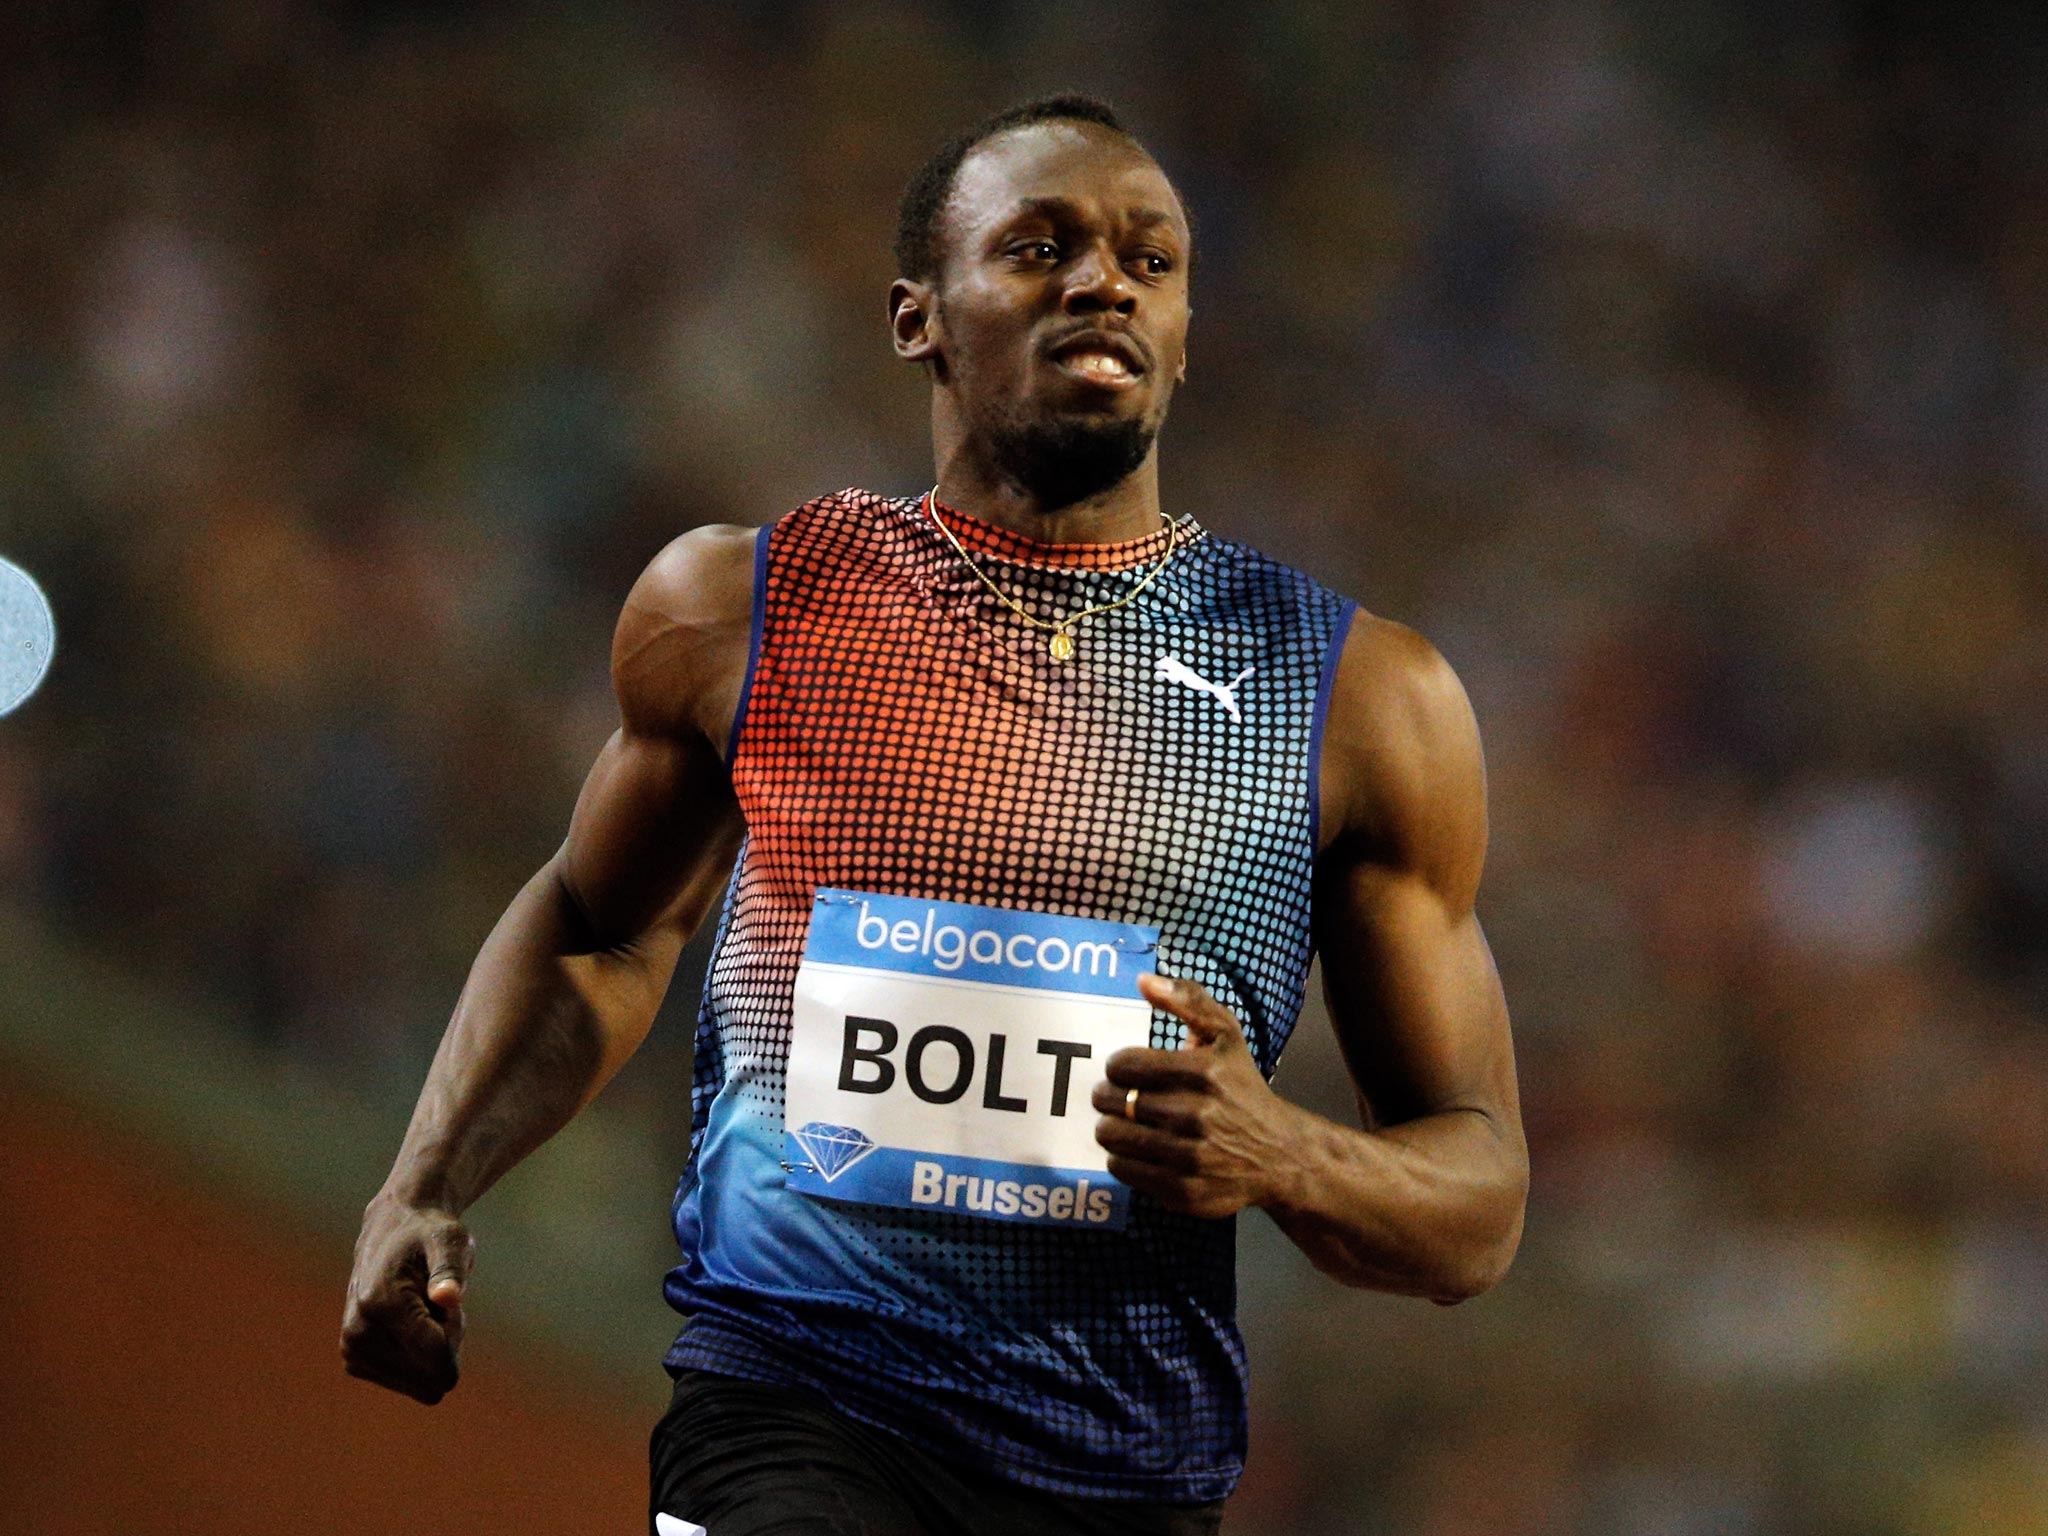 Olympic sprint champion Usain Bolt